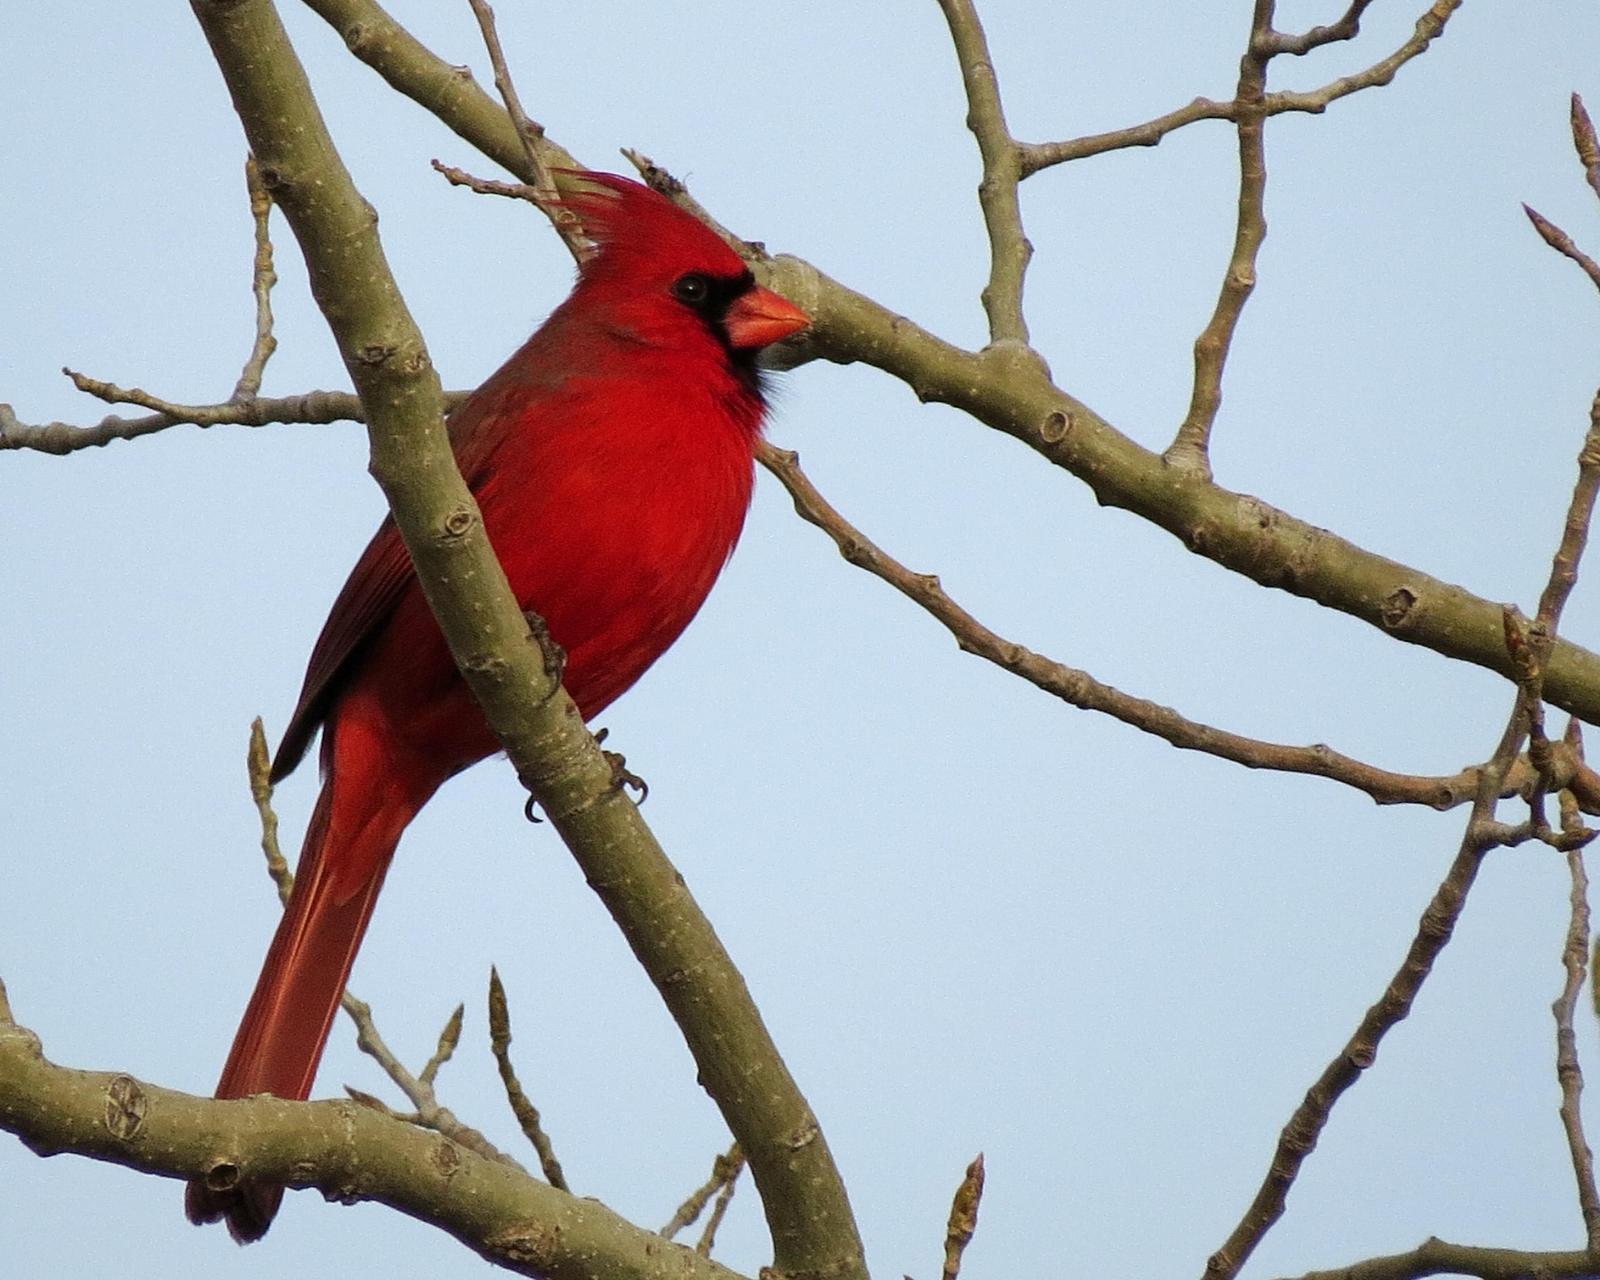 Northern Cardinal Photo by Kelly Preheim